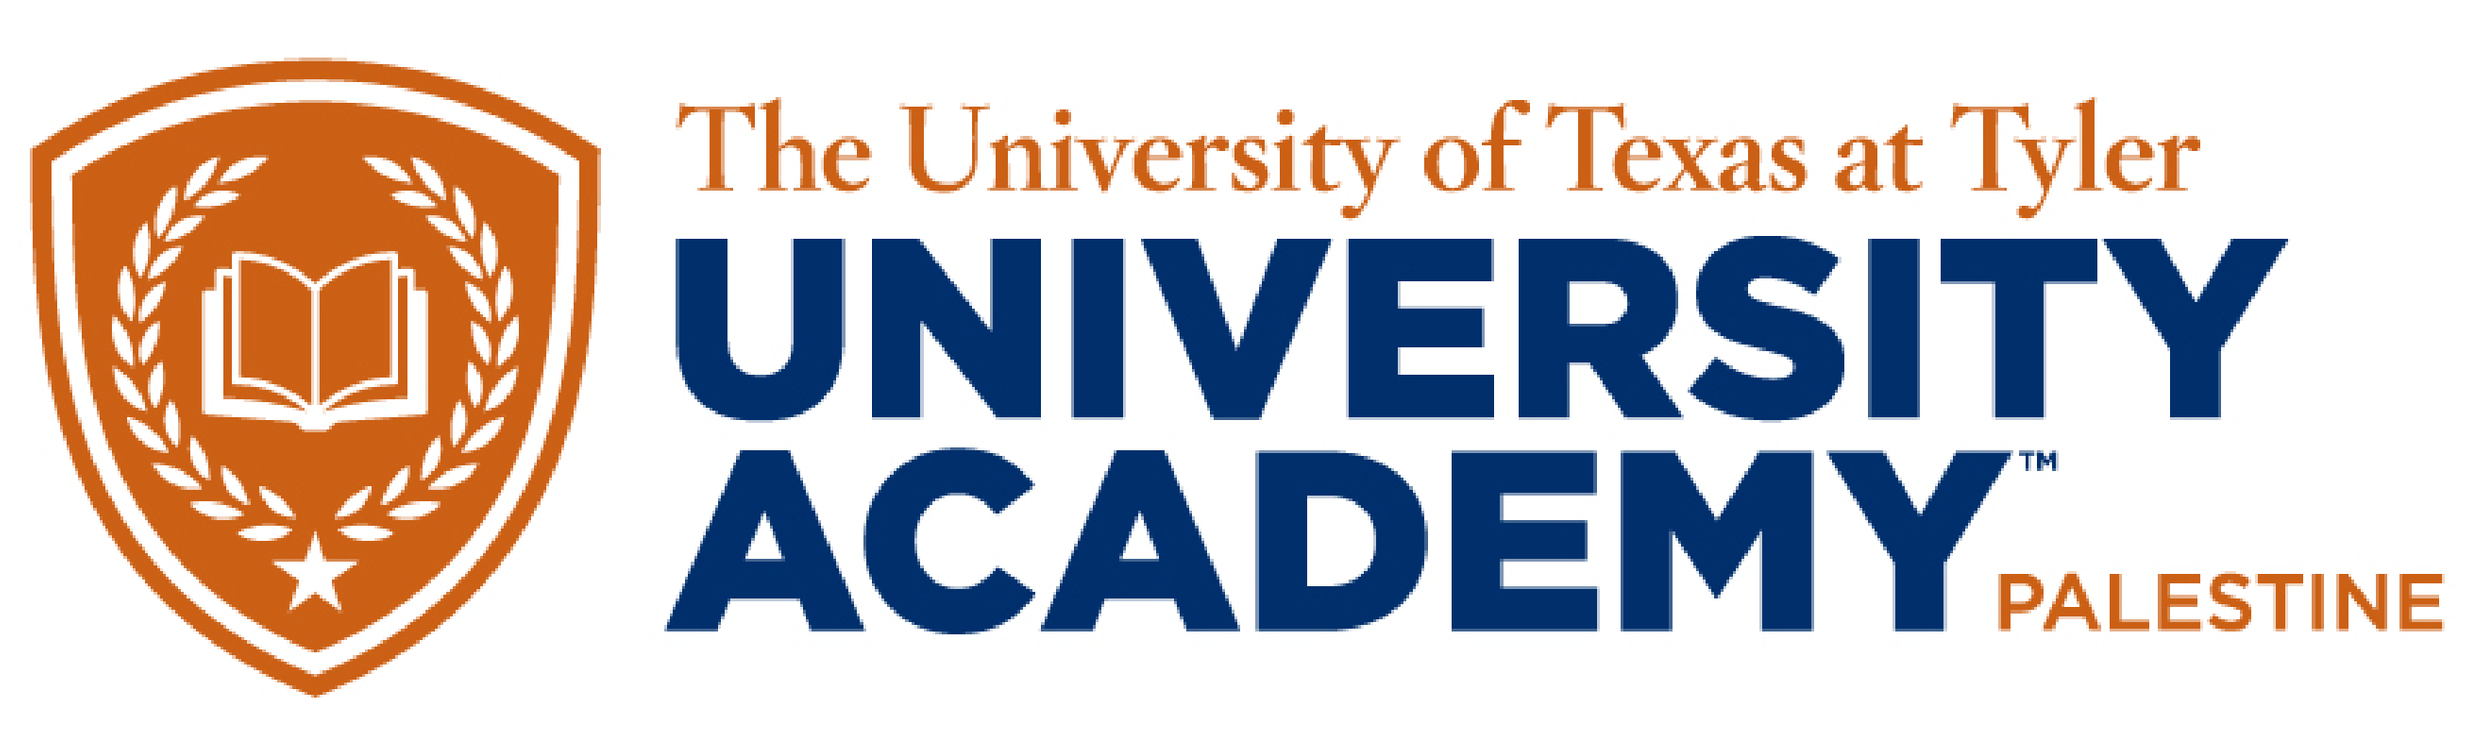 UT University Academy